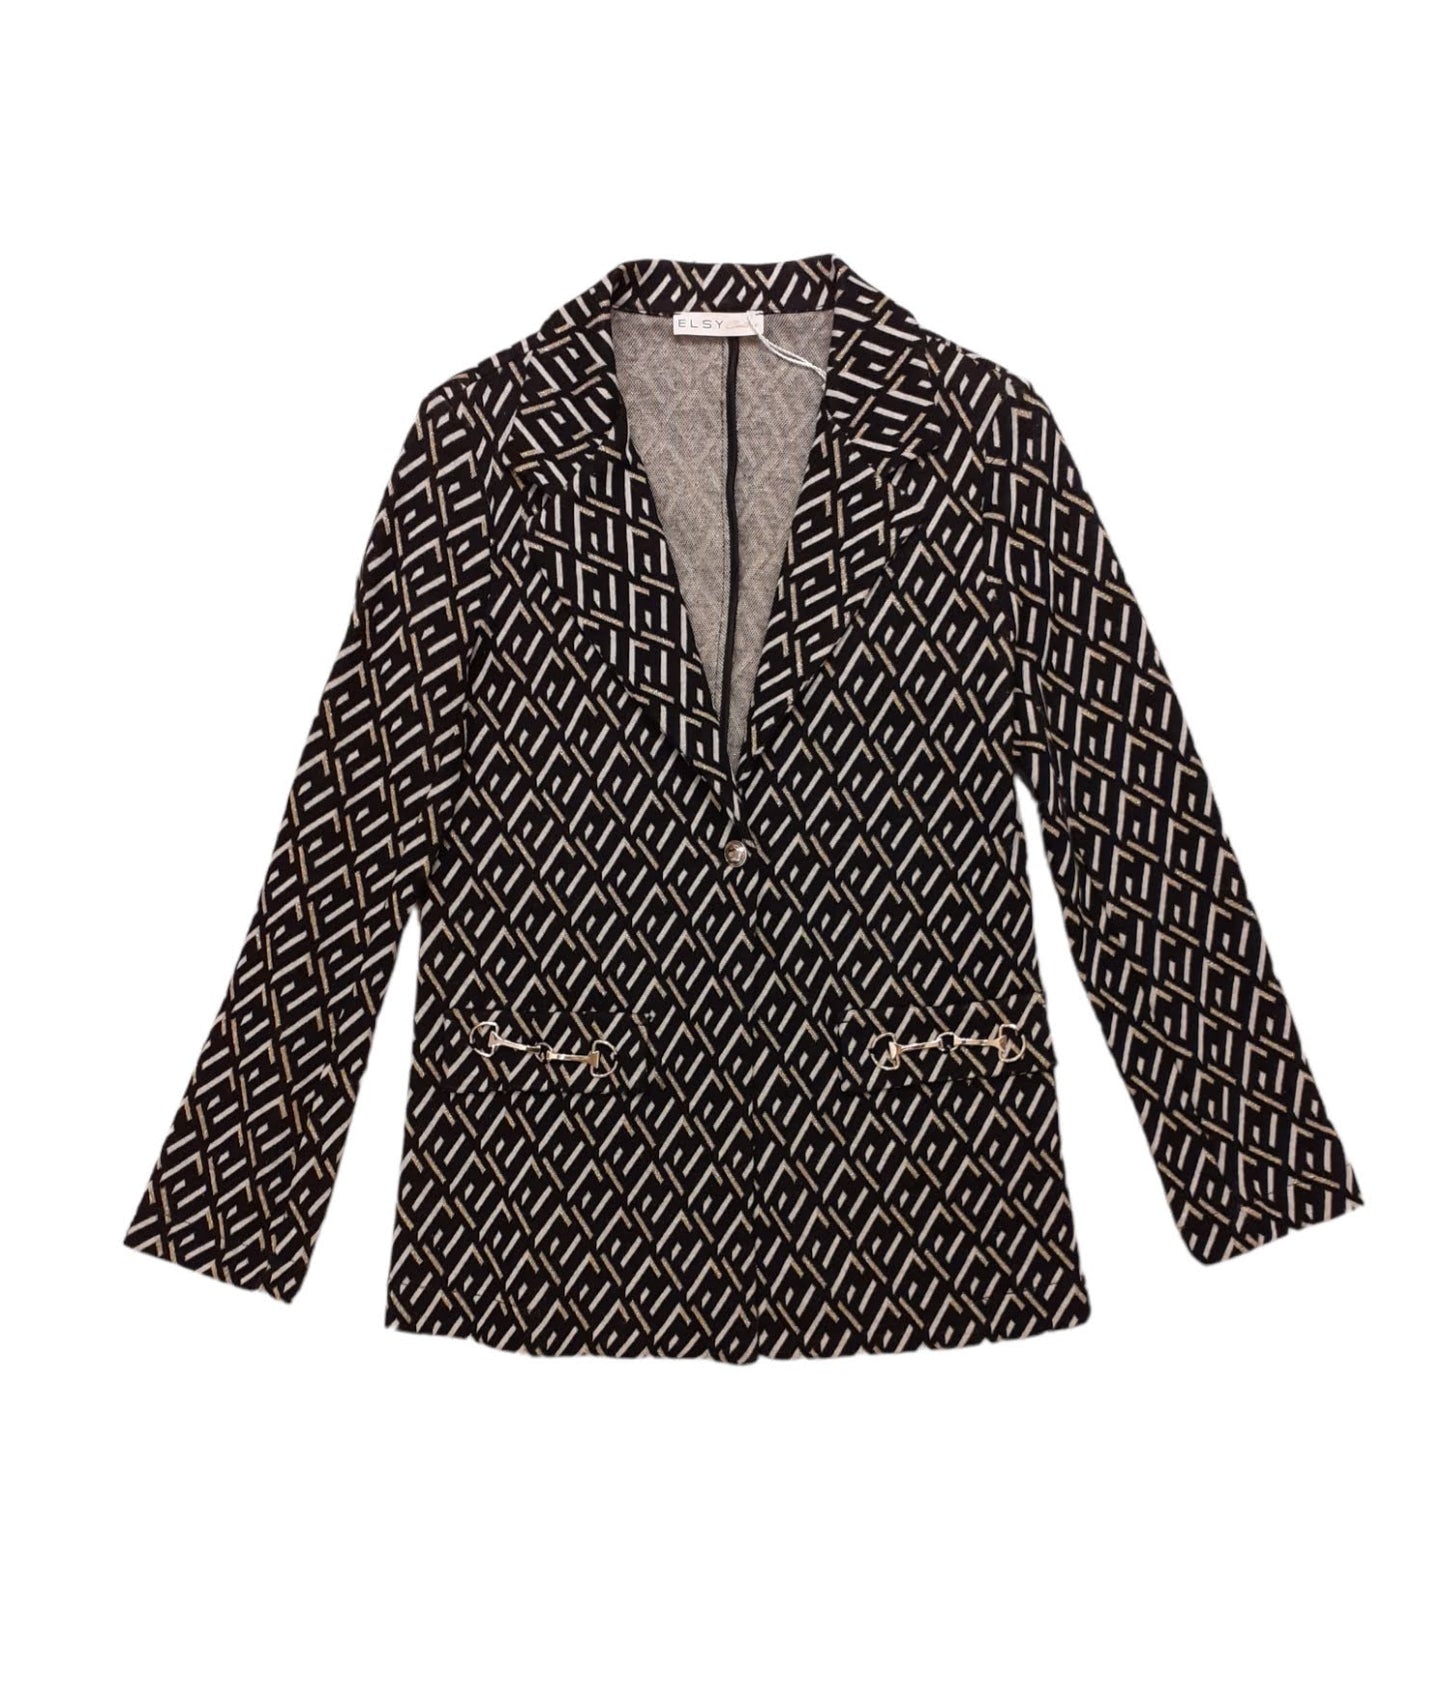 ELSY Couture Black-gold-cream patterned blazer jacket